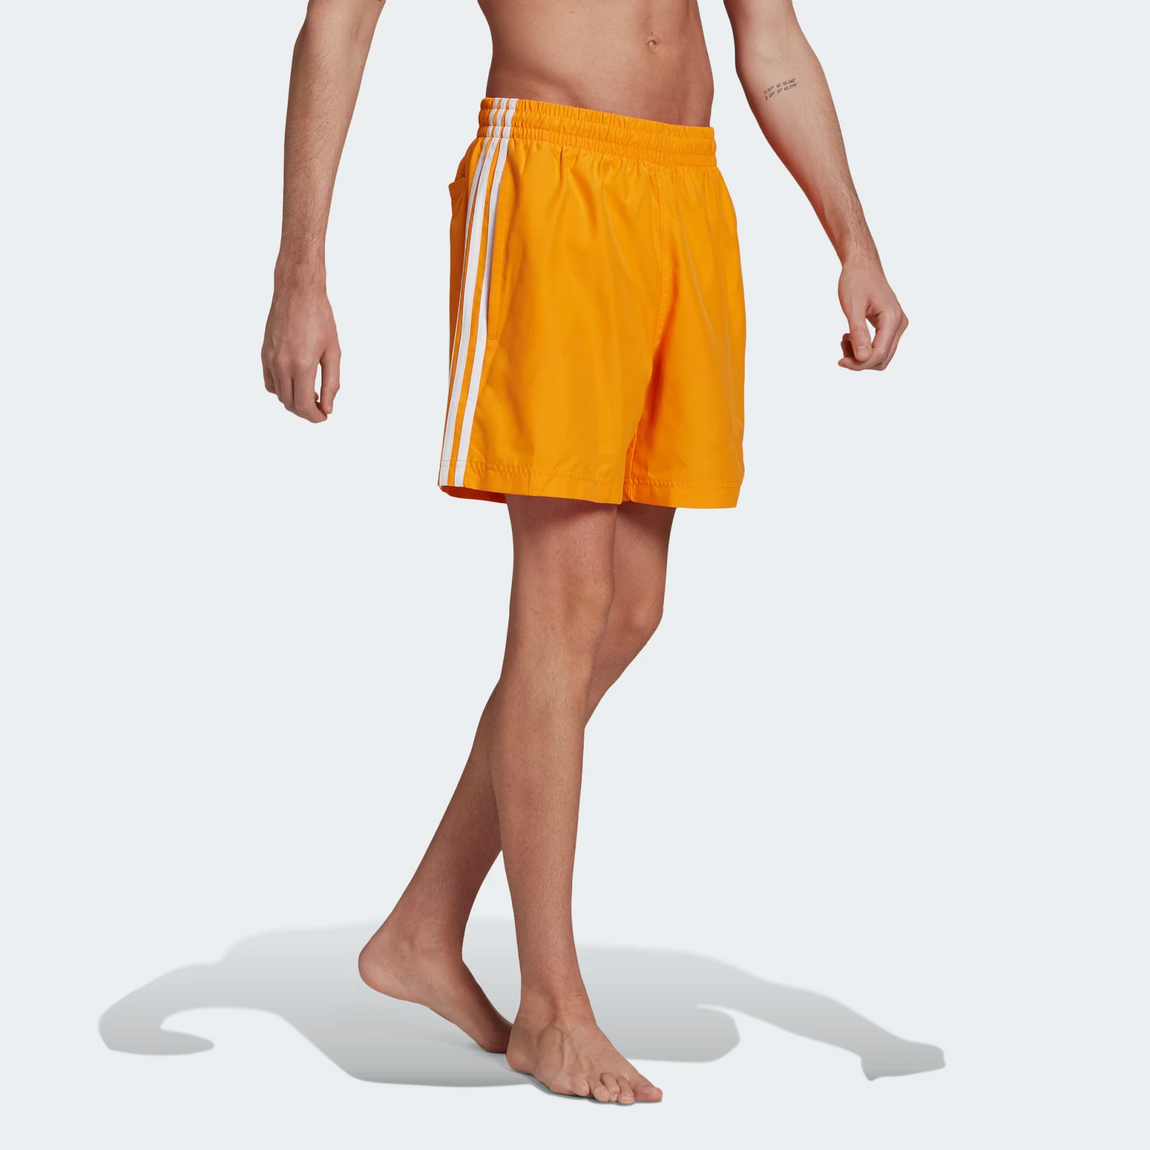 Adidas Classics 3-Stripes Swim Shorts (Bright Orange/White) - Adidas Classics 3-Stripes Swim Shorts (Bright Orange/White) - 